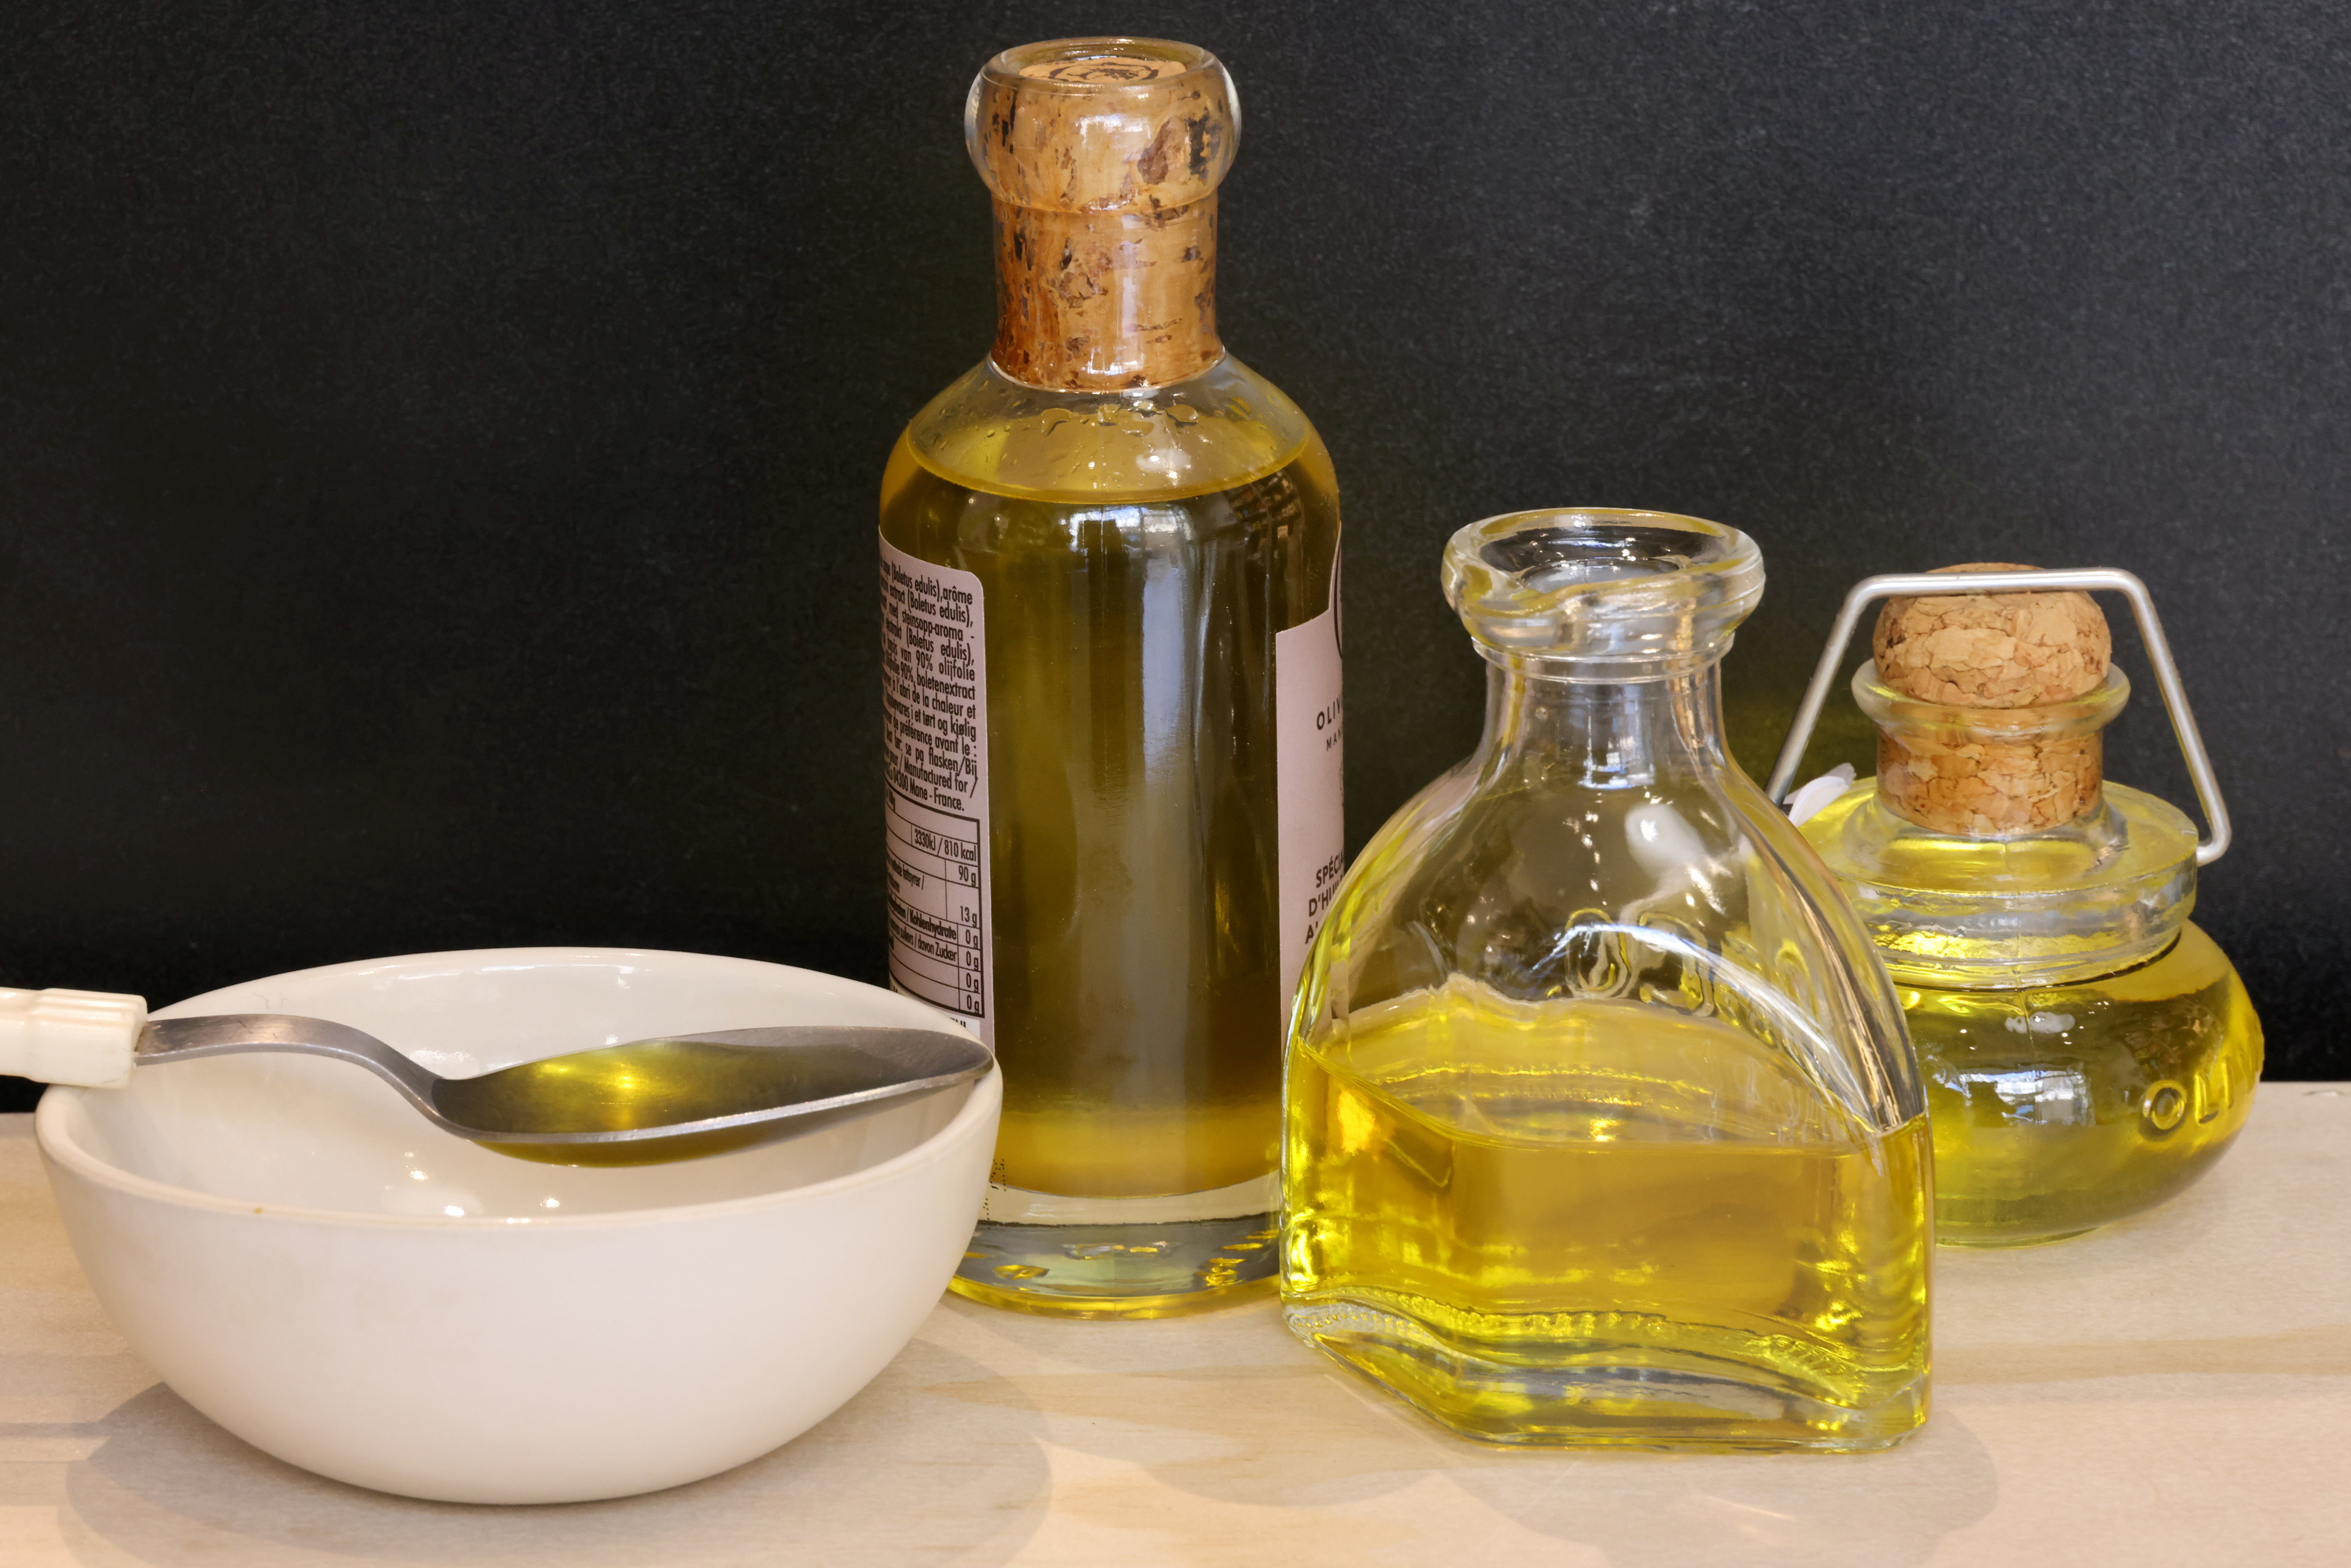 10 façons d'utiliser l'huile d'olive